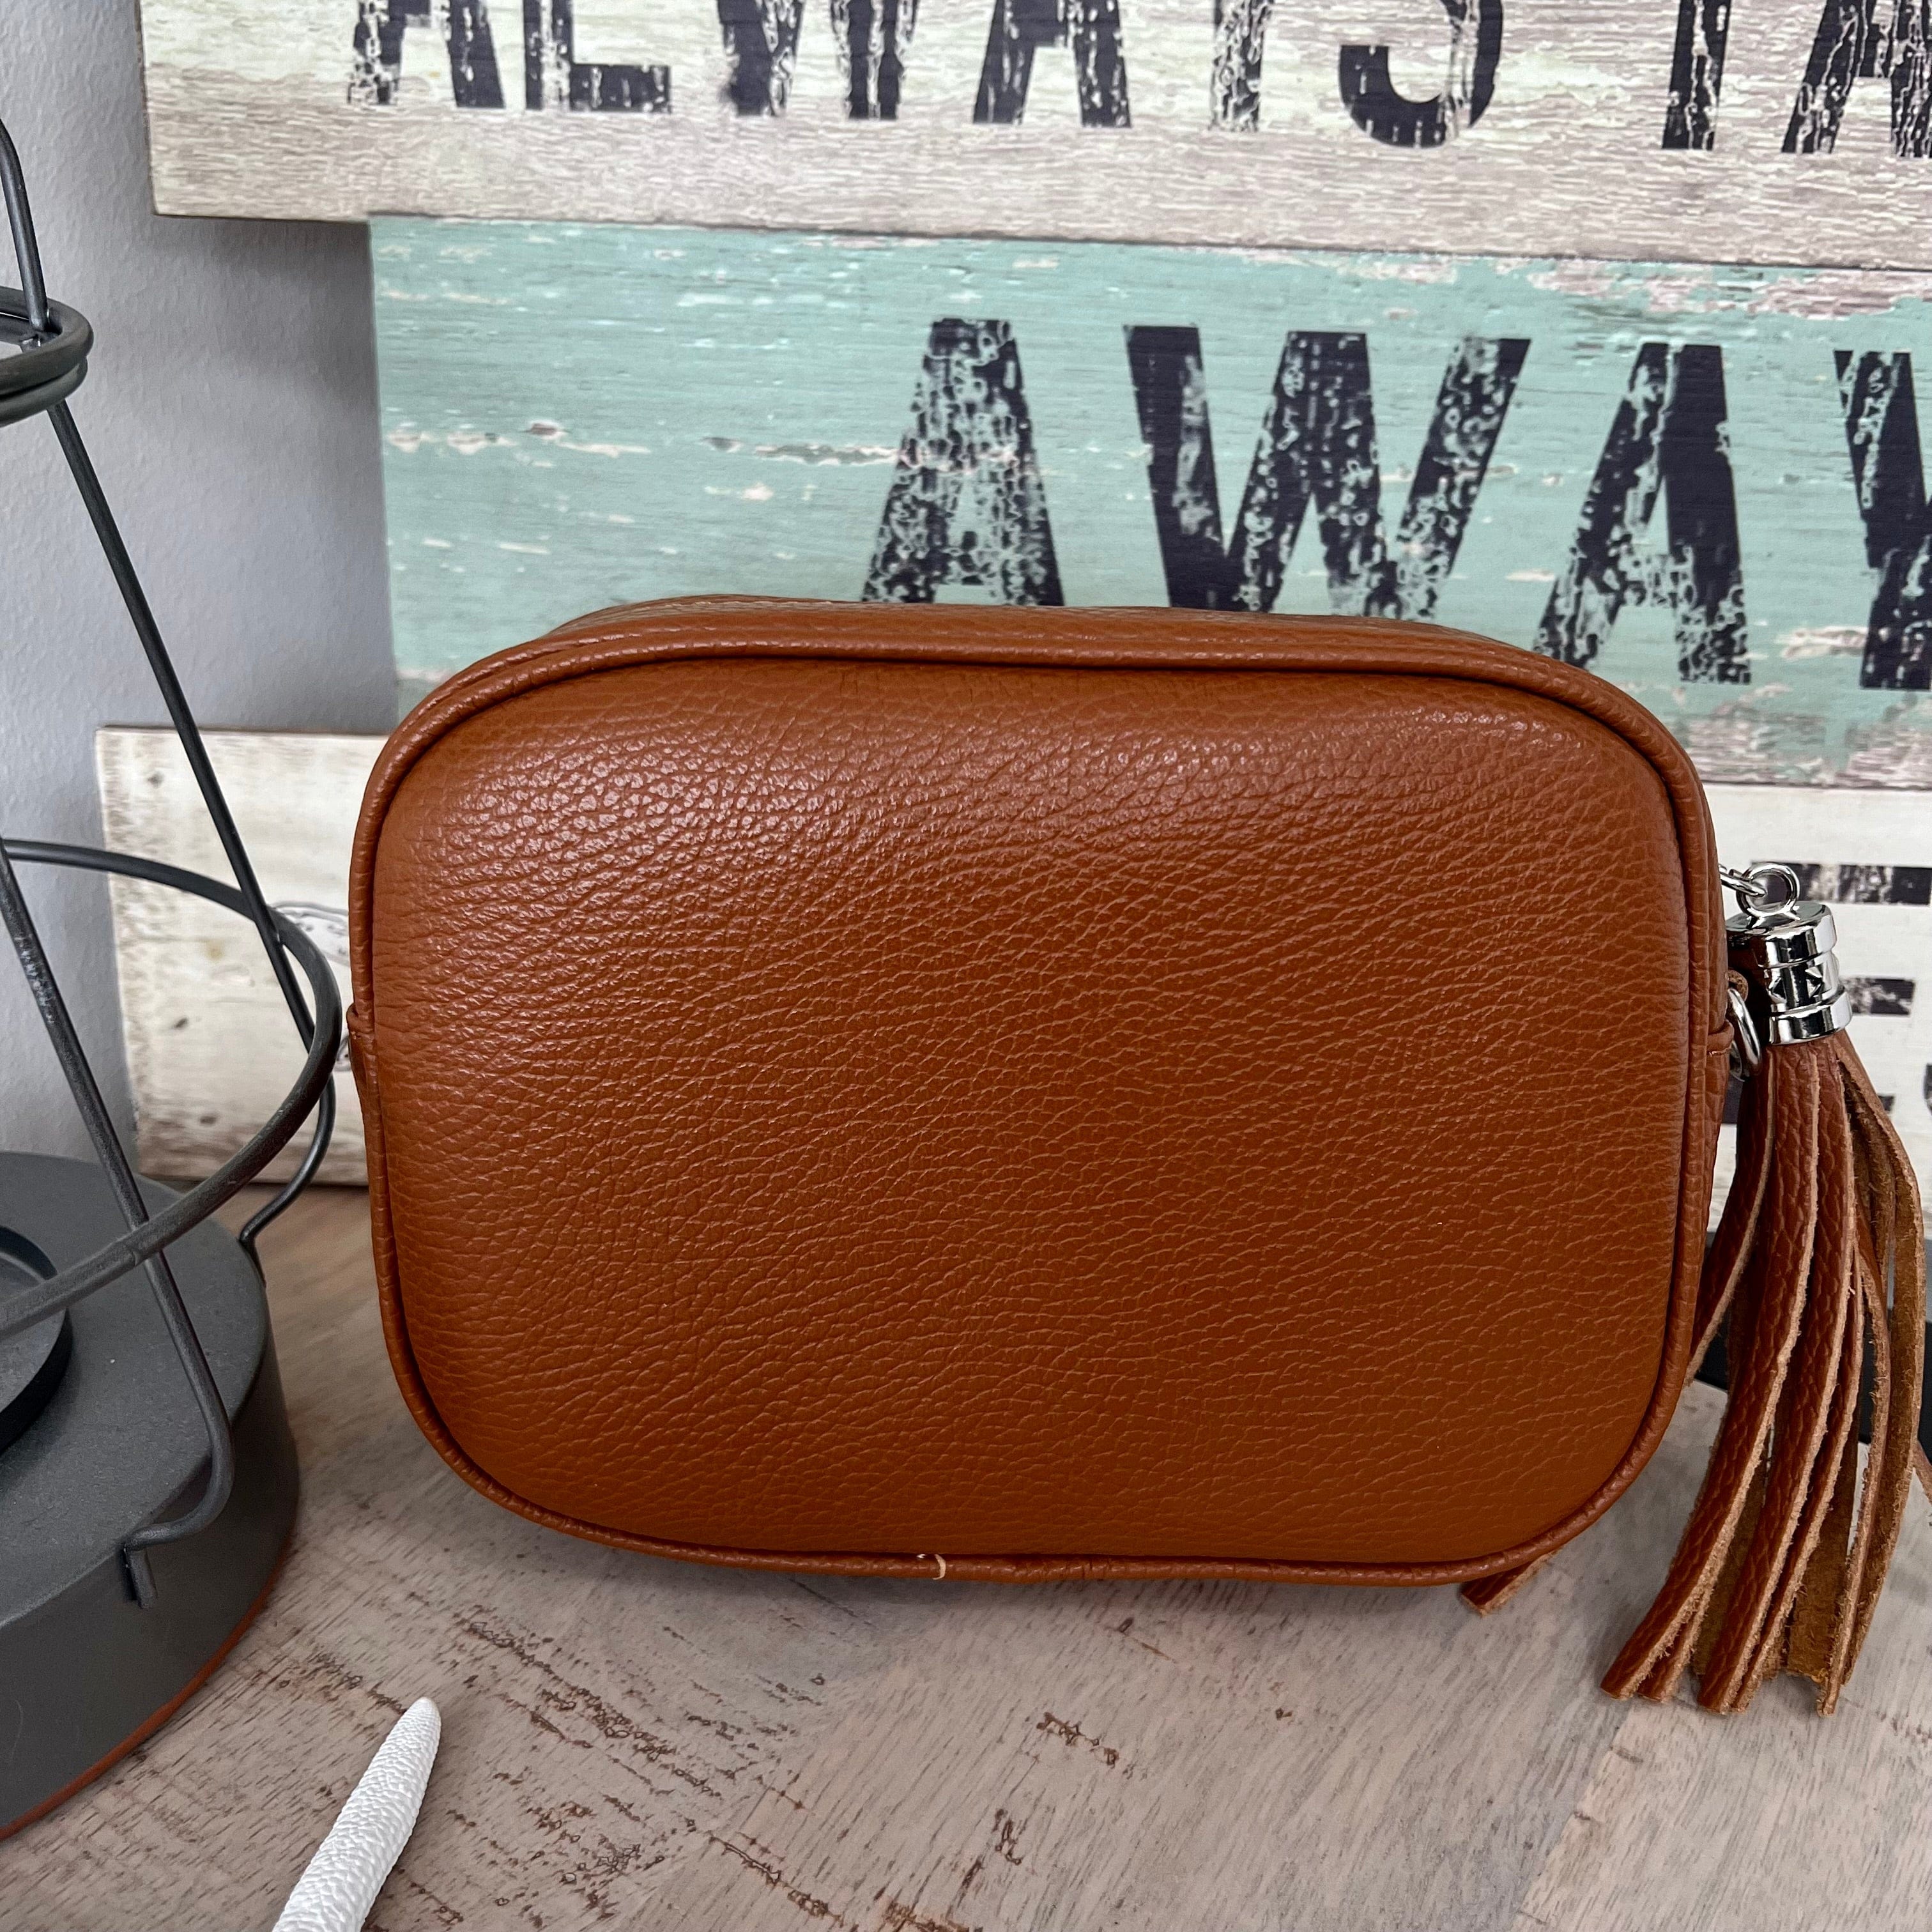 lusciousscarves Handbags Tan Leather tassel camera style crossbody bag.